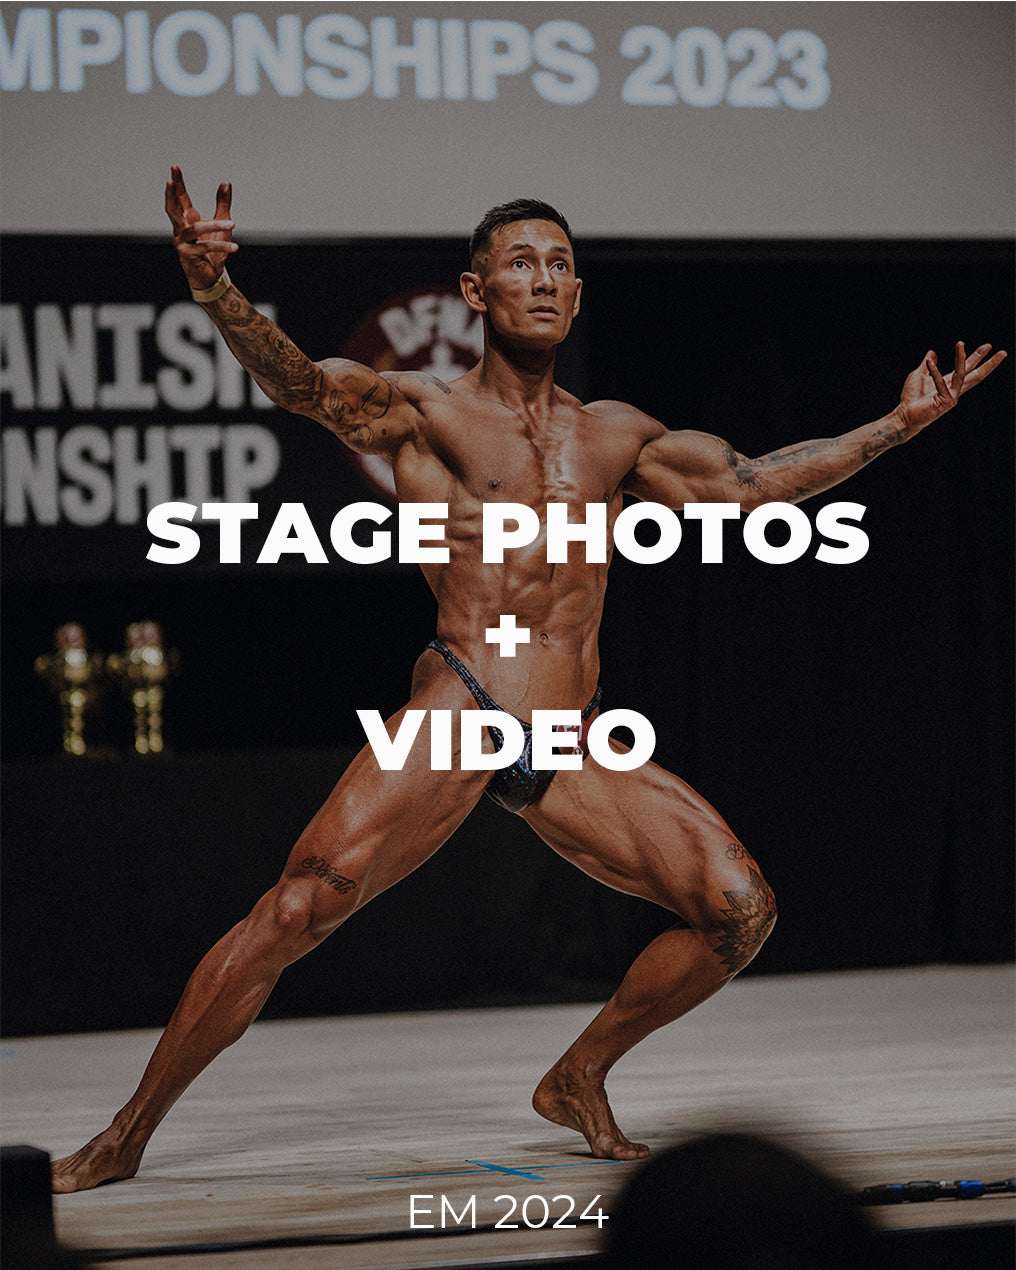 European Championships - Stage Photos & Video